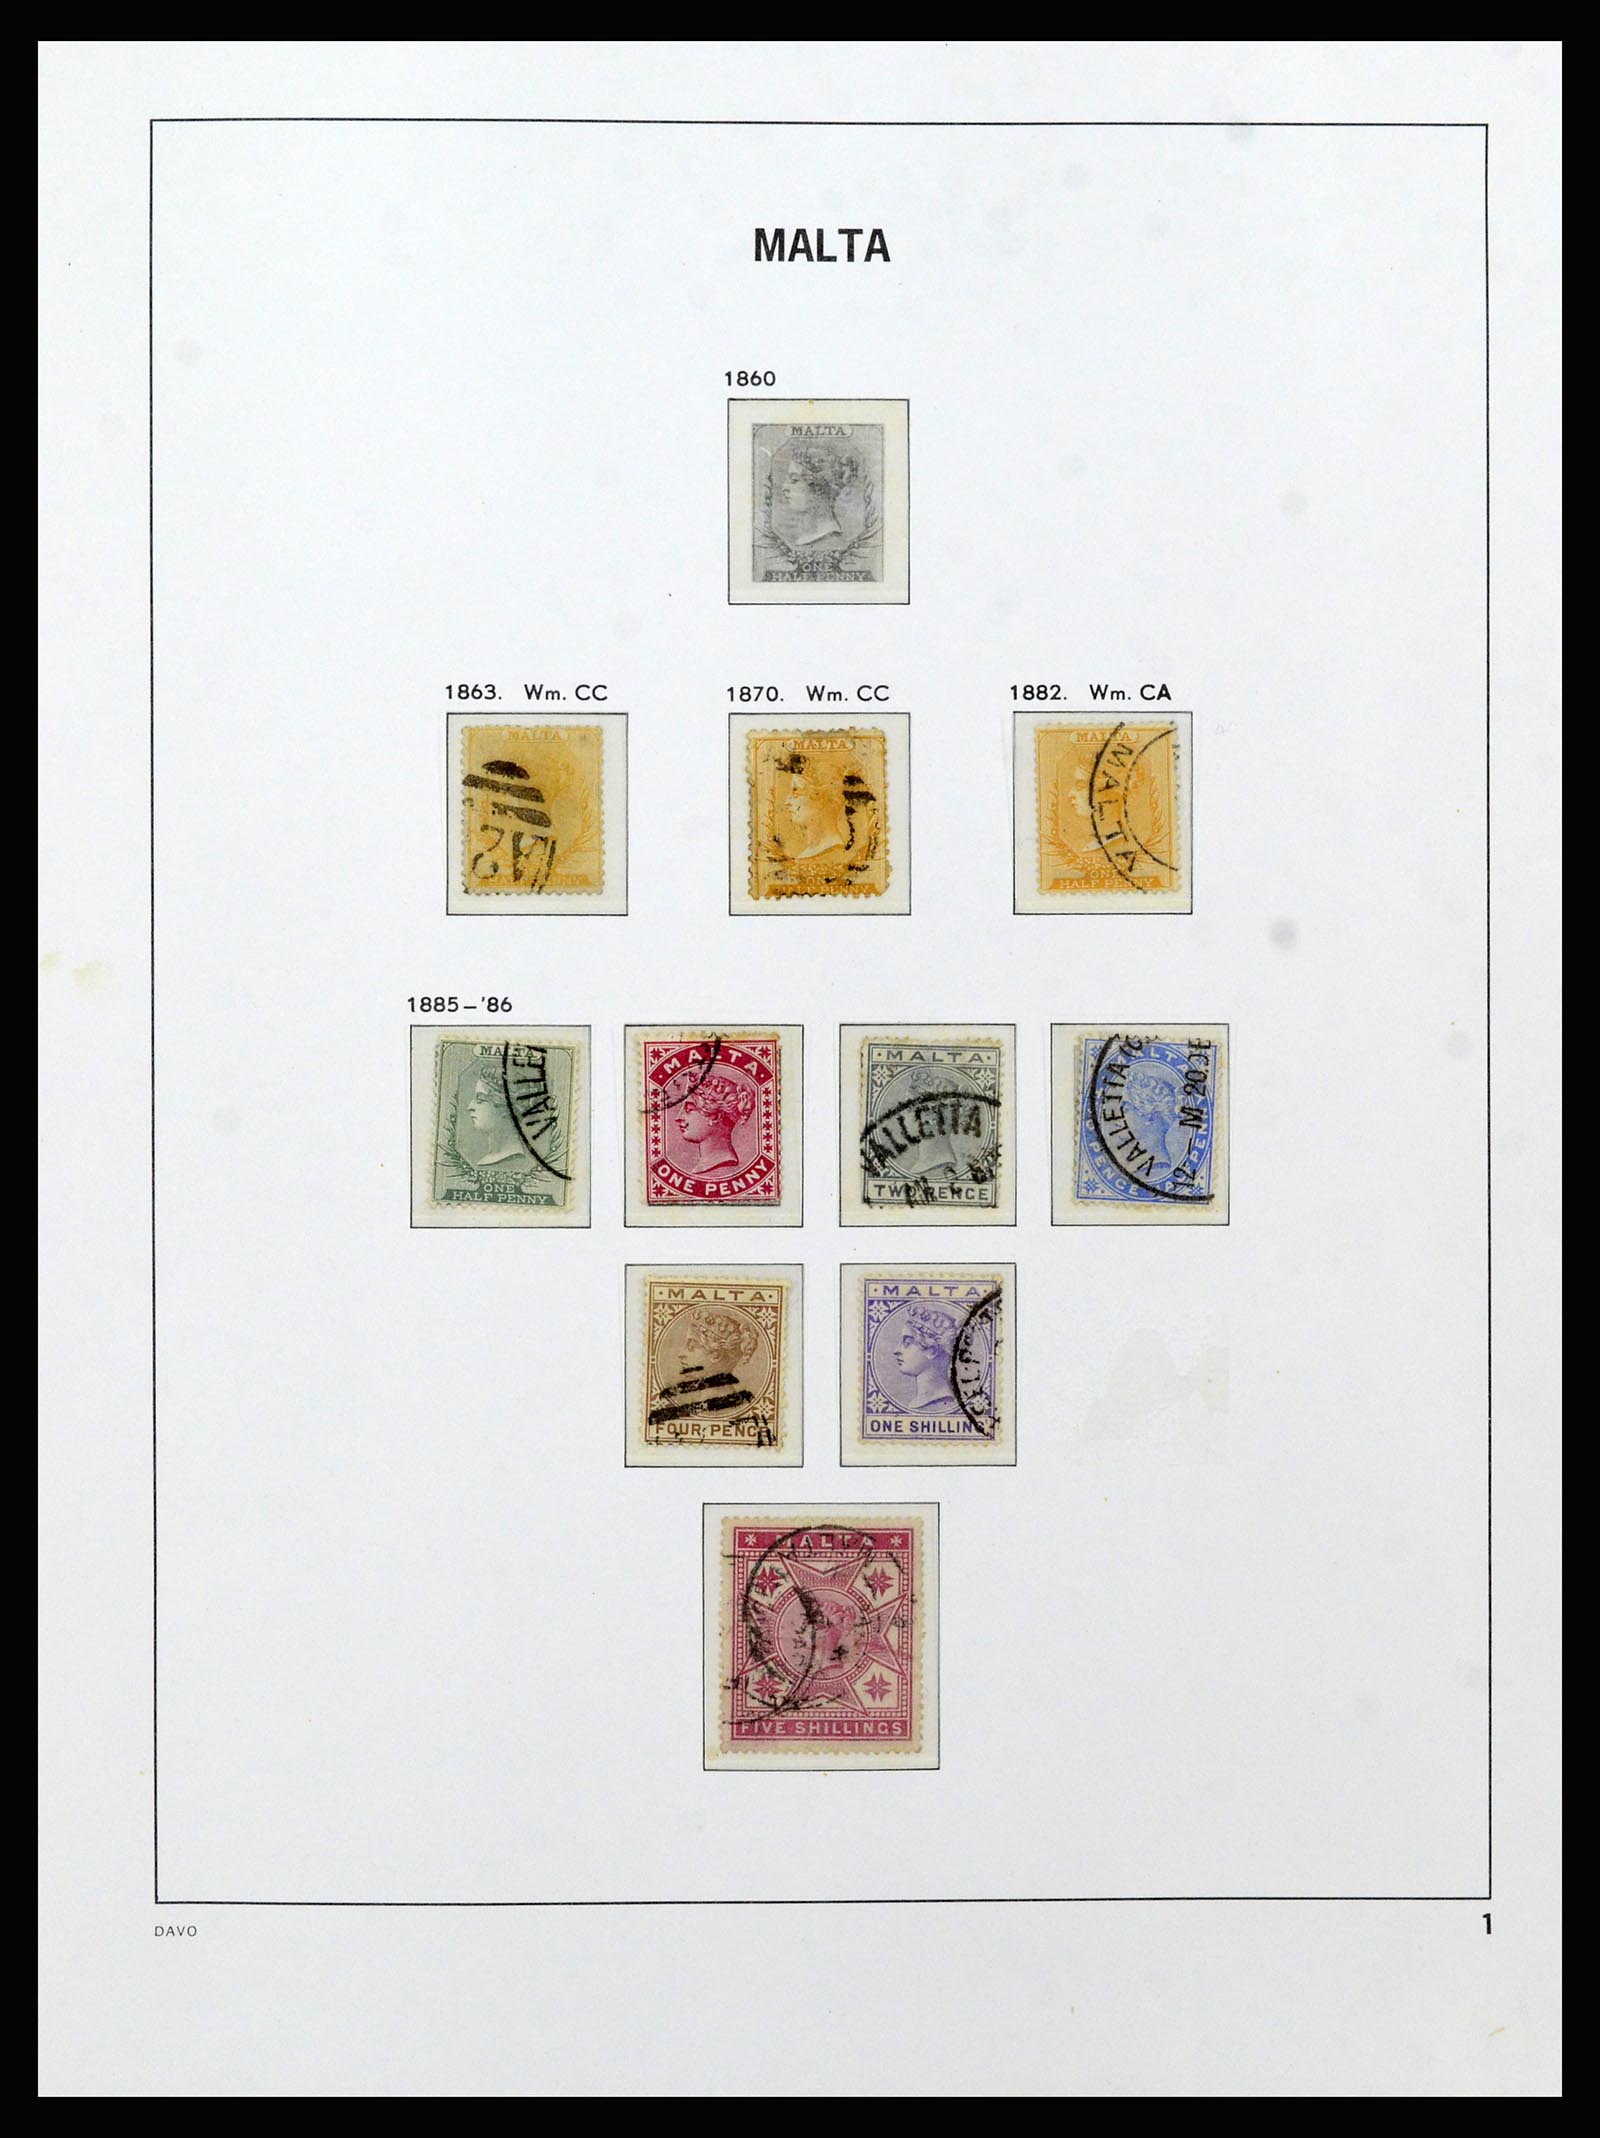 37212 001 - Stamp collection 37212 Malta 1863-1989.